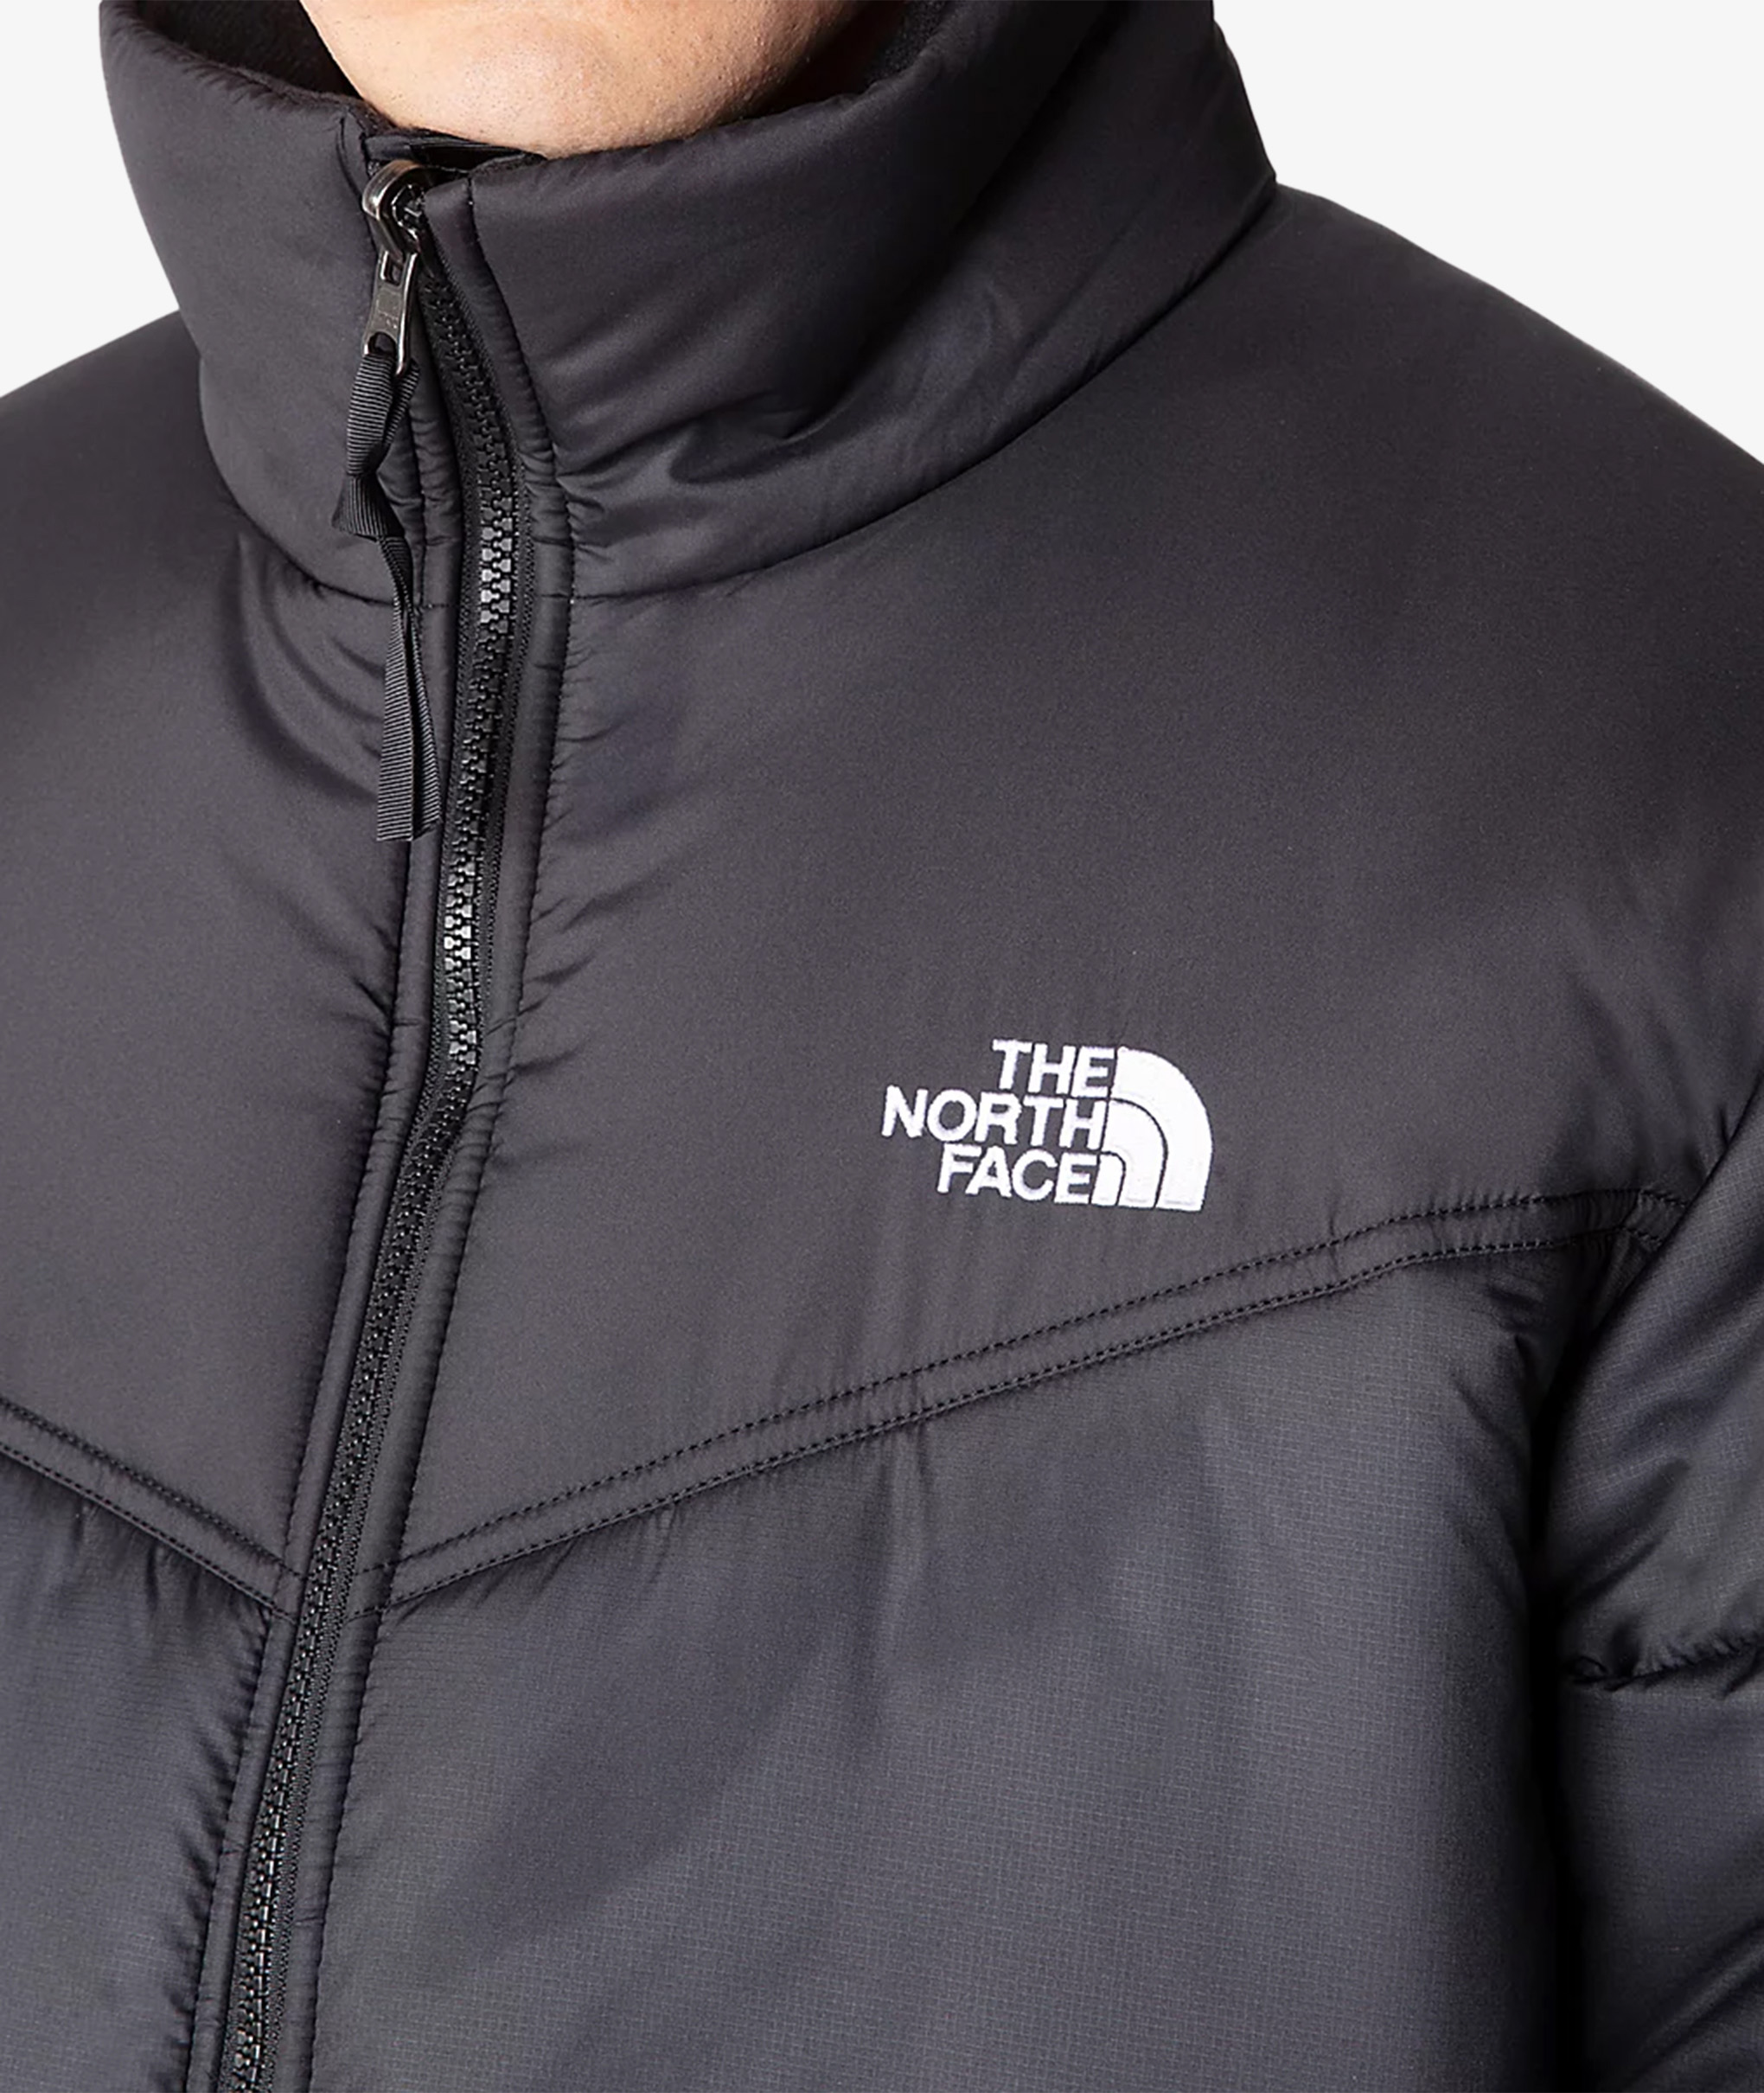 Norse North - The Face SAIKURU Worldwide TNF Shipping Store M Black | JACKET -